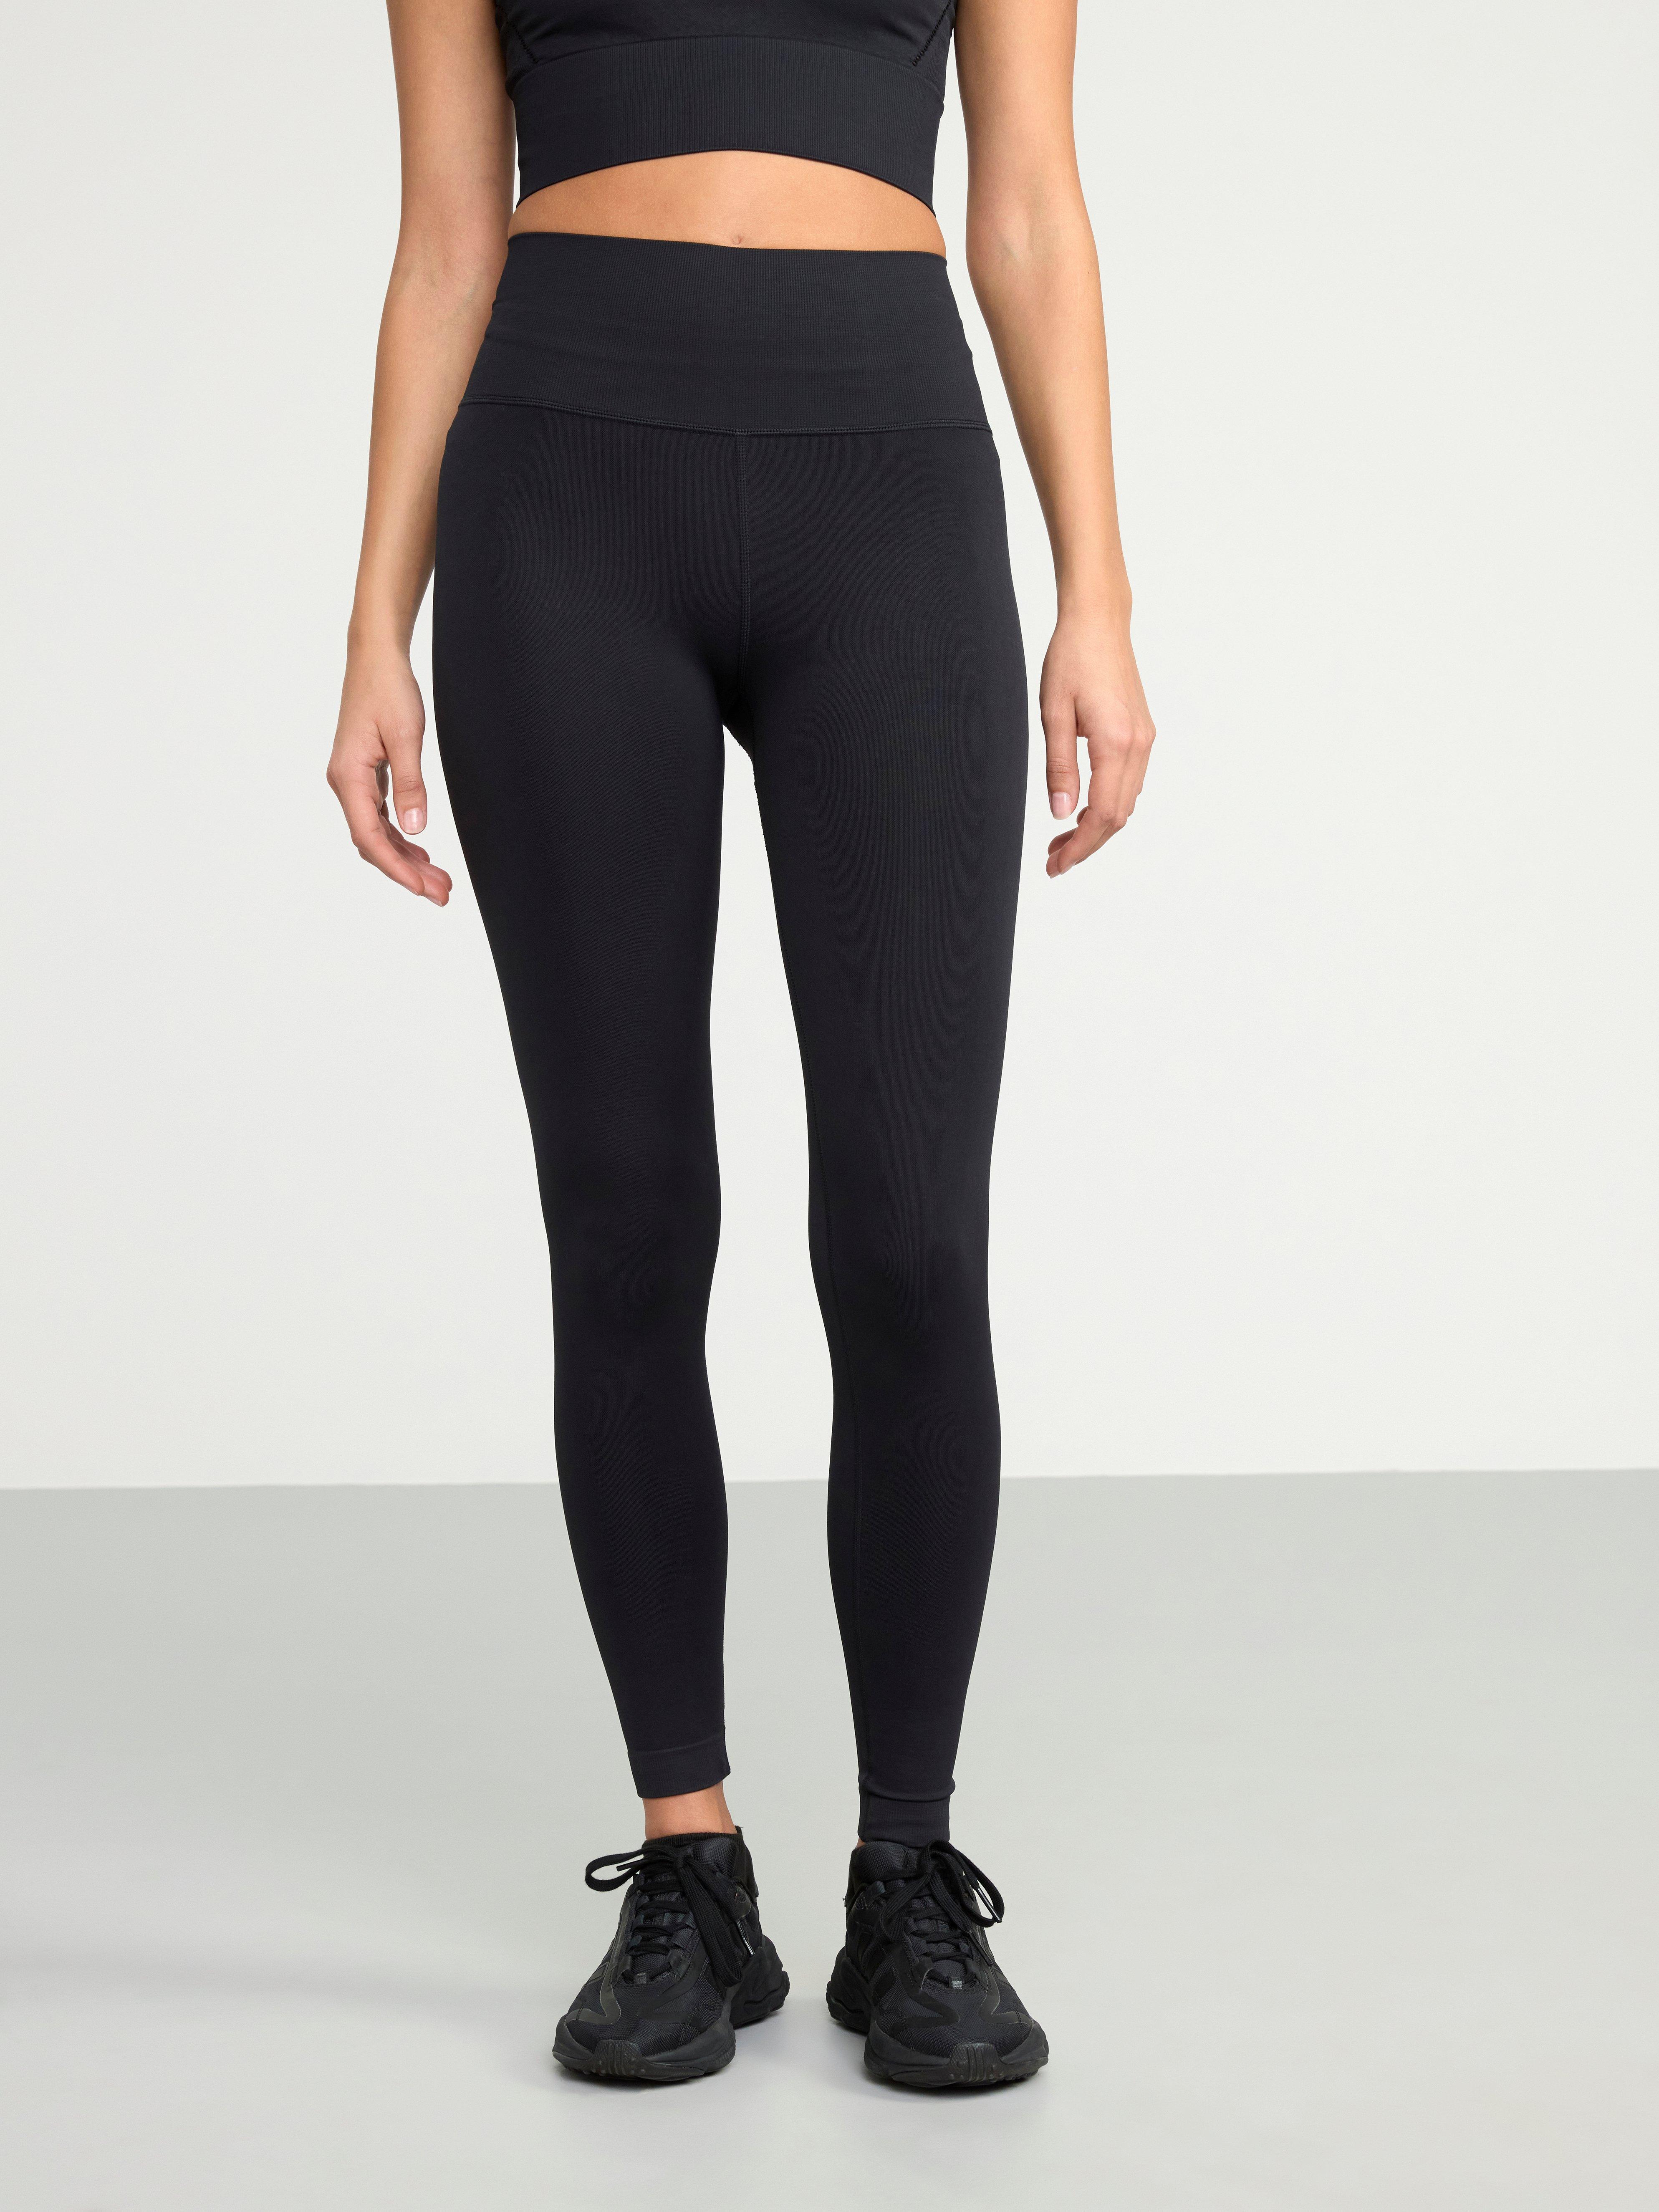 Women Sports Crop Top Long Sleeve Seamless Tight Fitness Yoga Shirts Net  Yarn